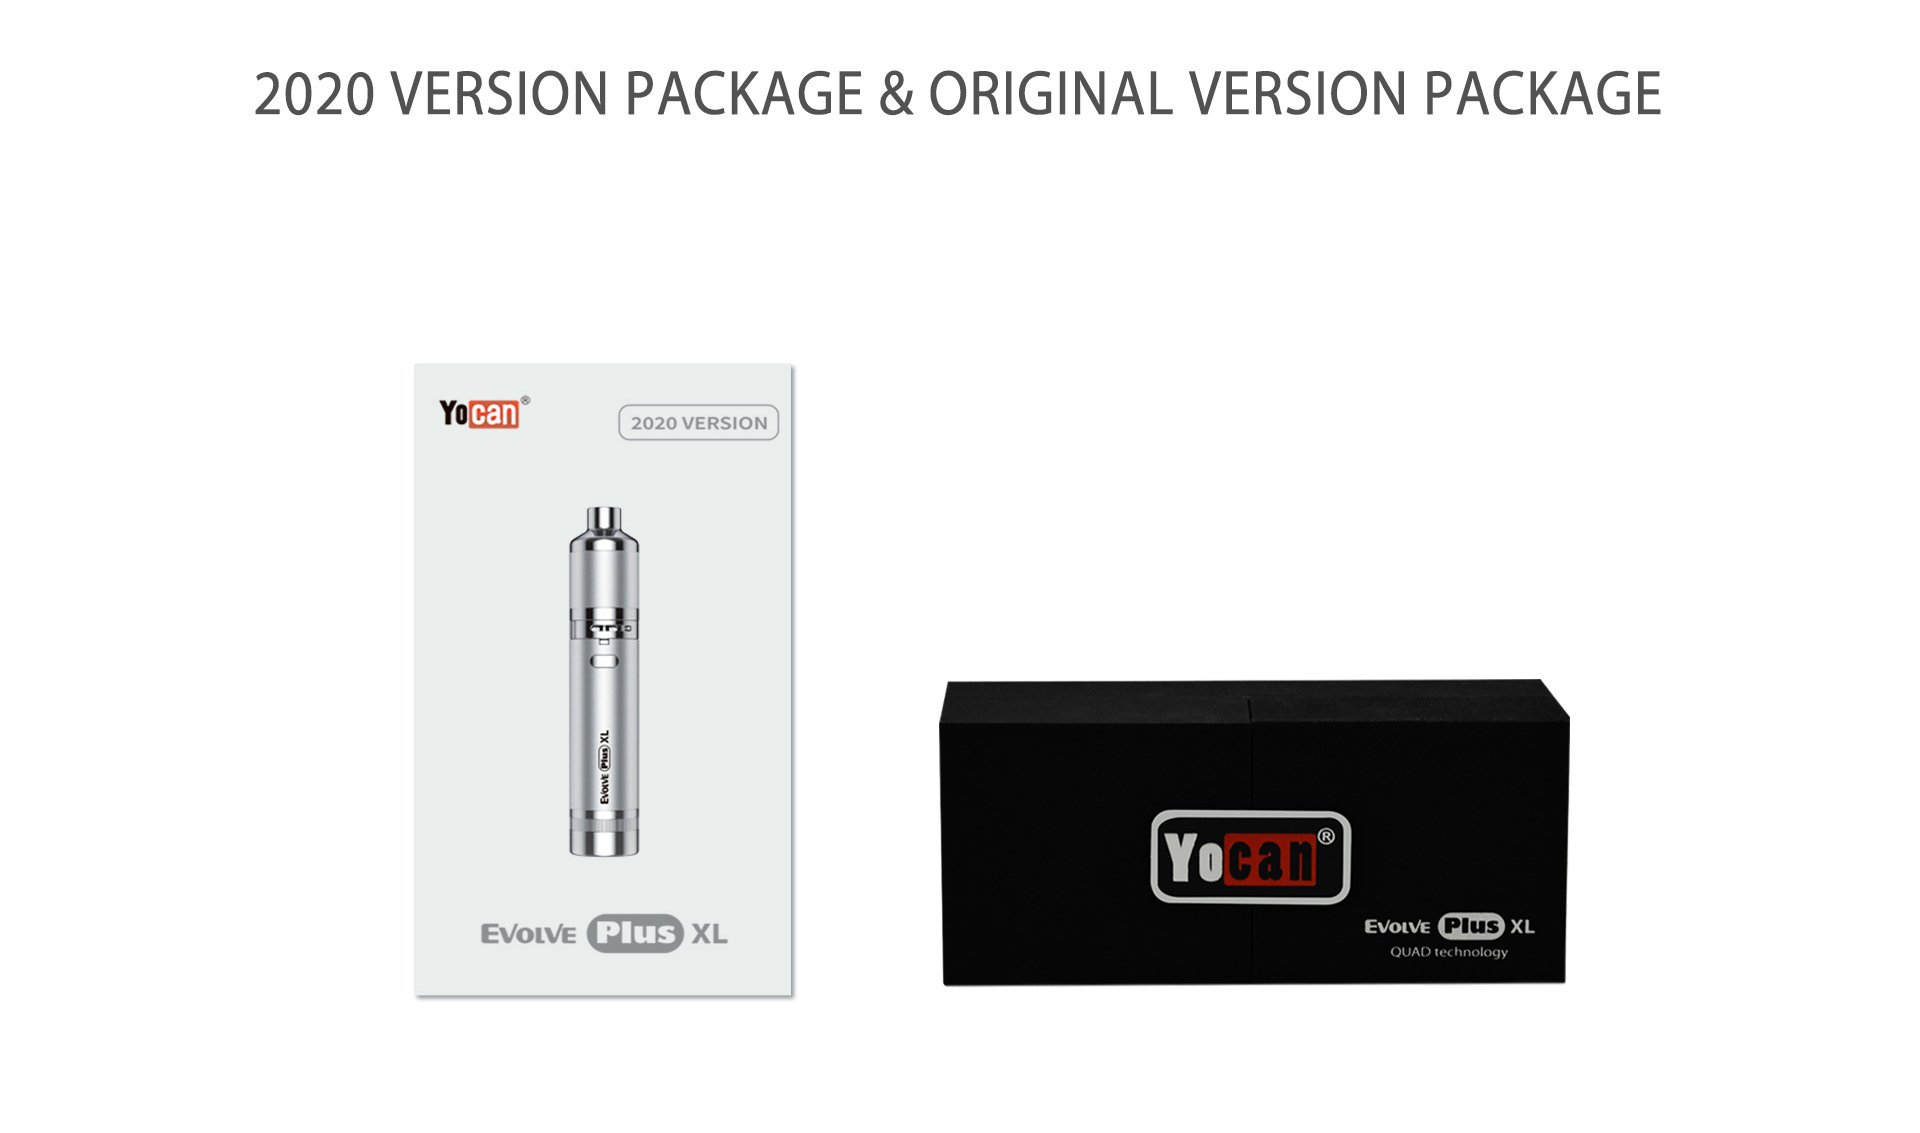 Yocan Evolve Plus XL Vaporizer 2020 version has new package box.